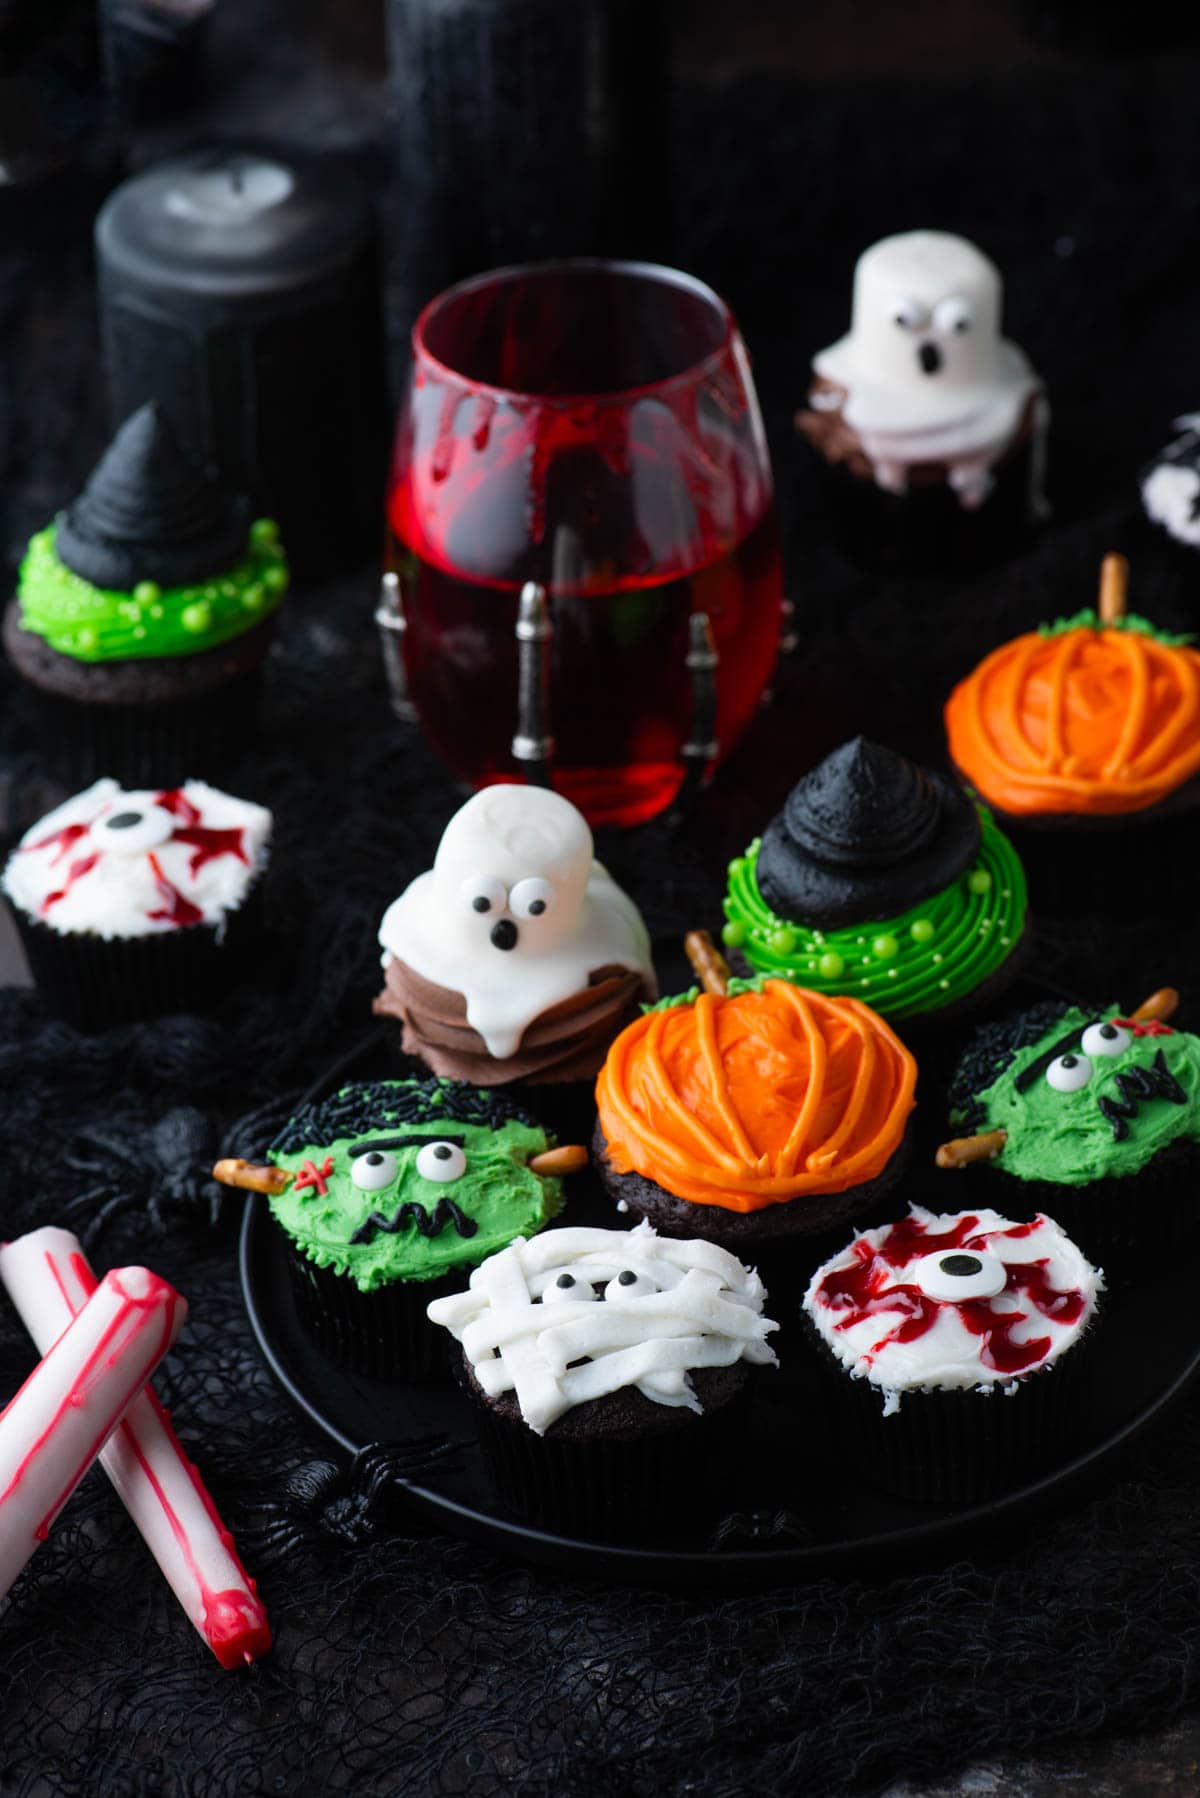 assortment of halloween cupcakes including ghost cupcakes, eyeball cupcakes, mummy cupcakes, pumpkin cupcakes, witch hat cupcakes, and spider cupcakes